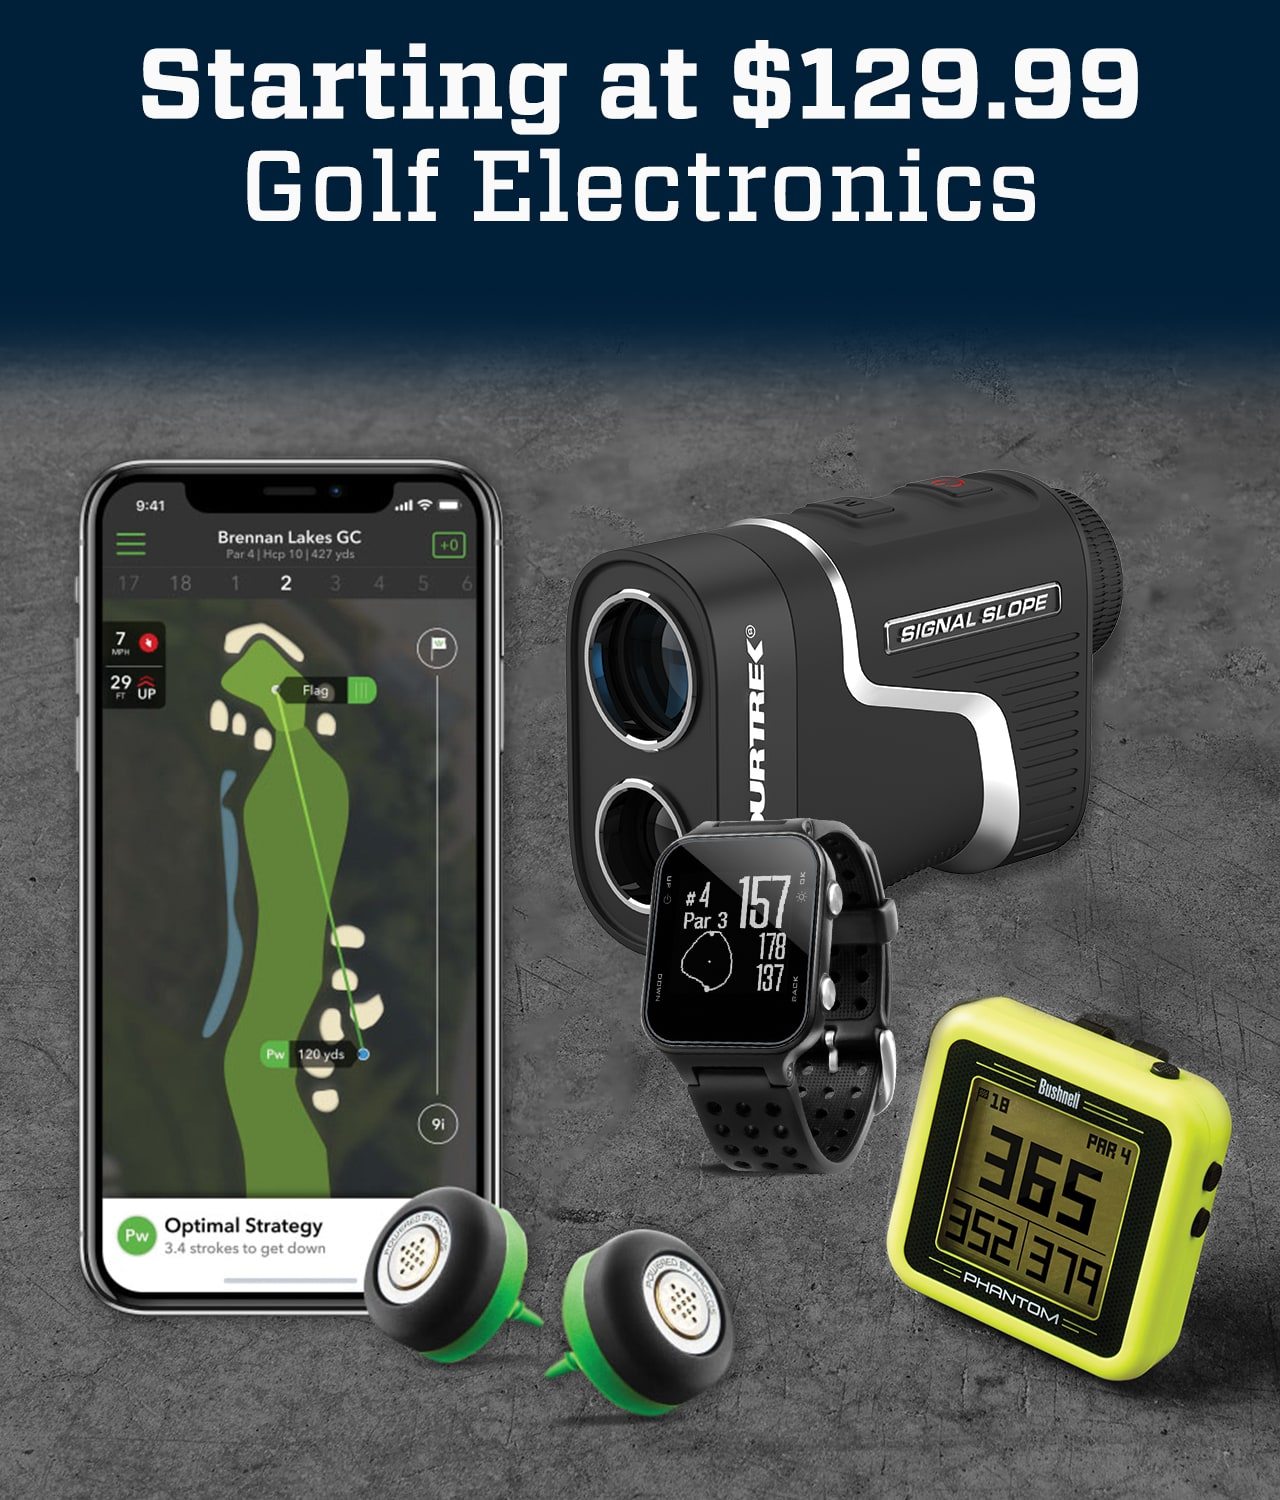 Starting at $129.99 golf electronics